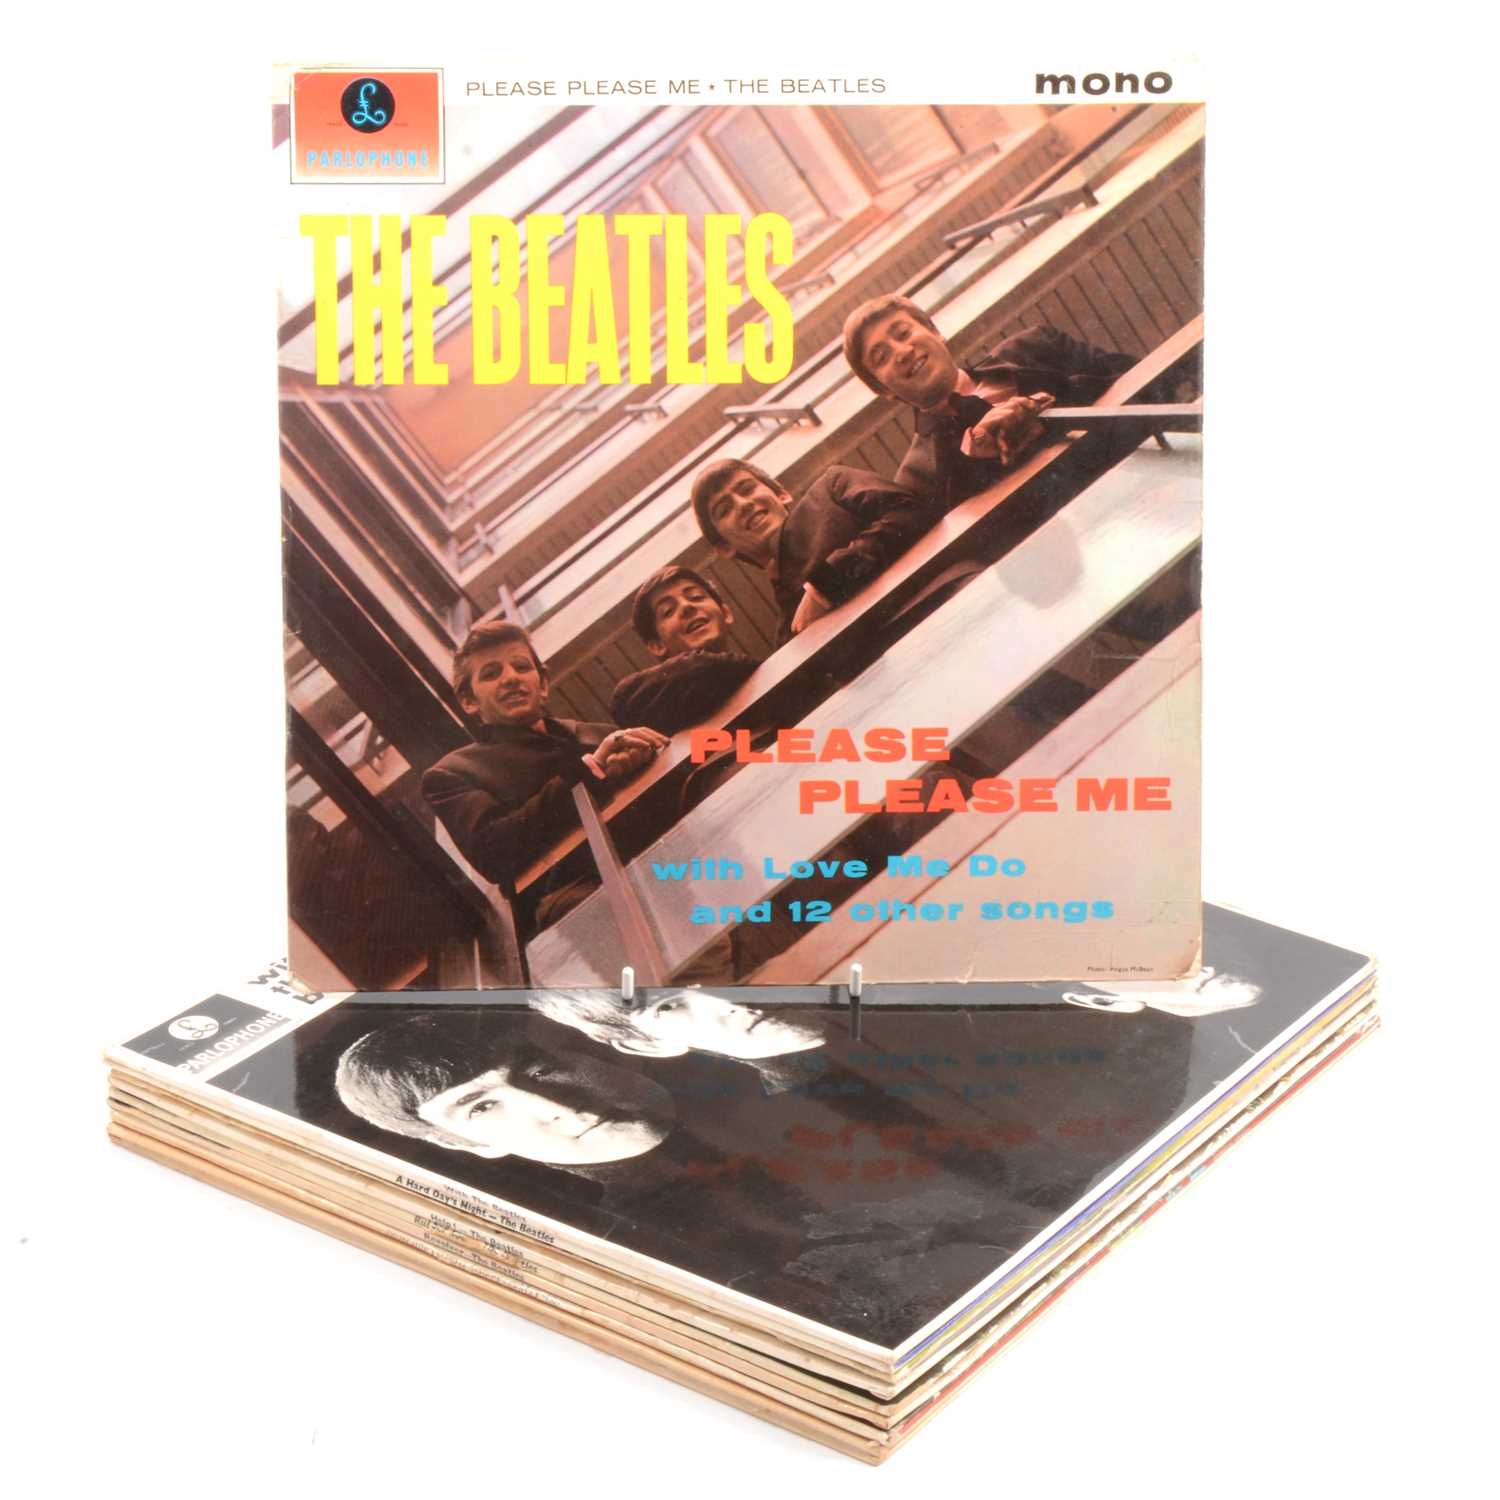 Lot 218 - The Beatles LP vinyl records